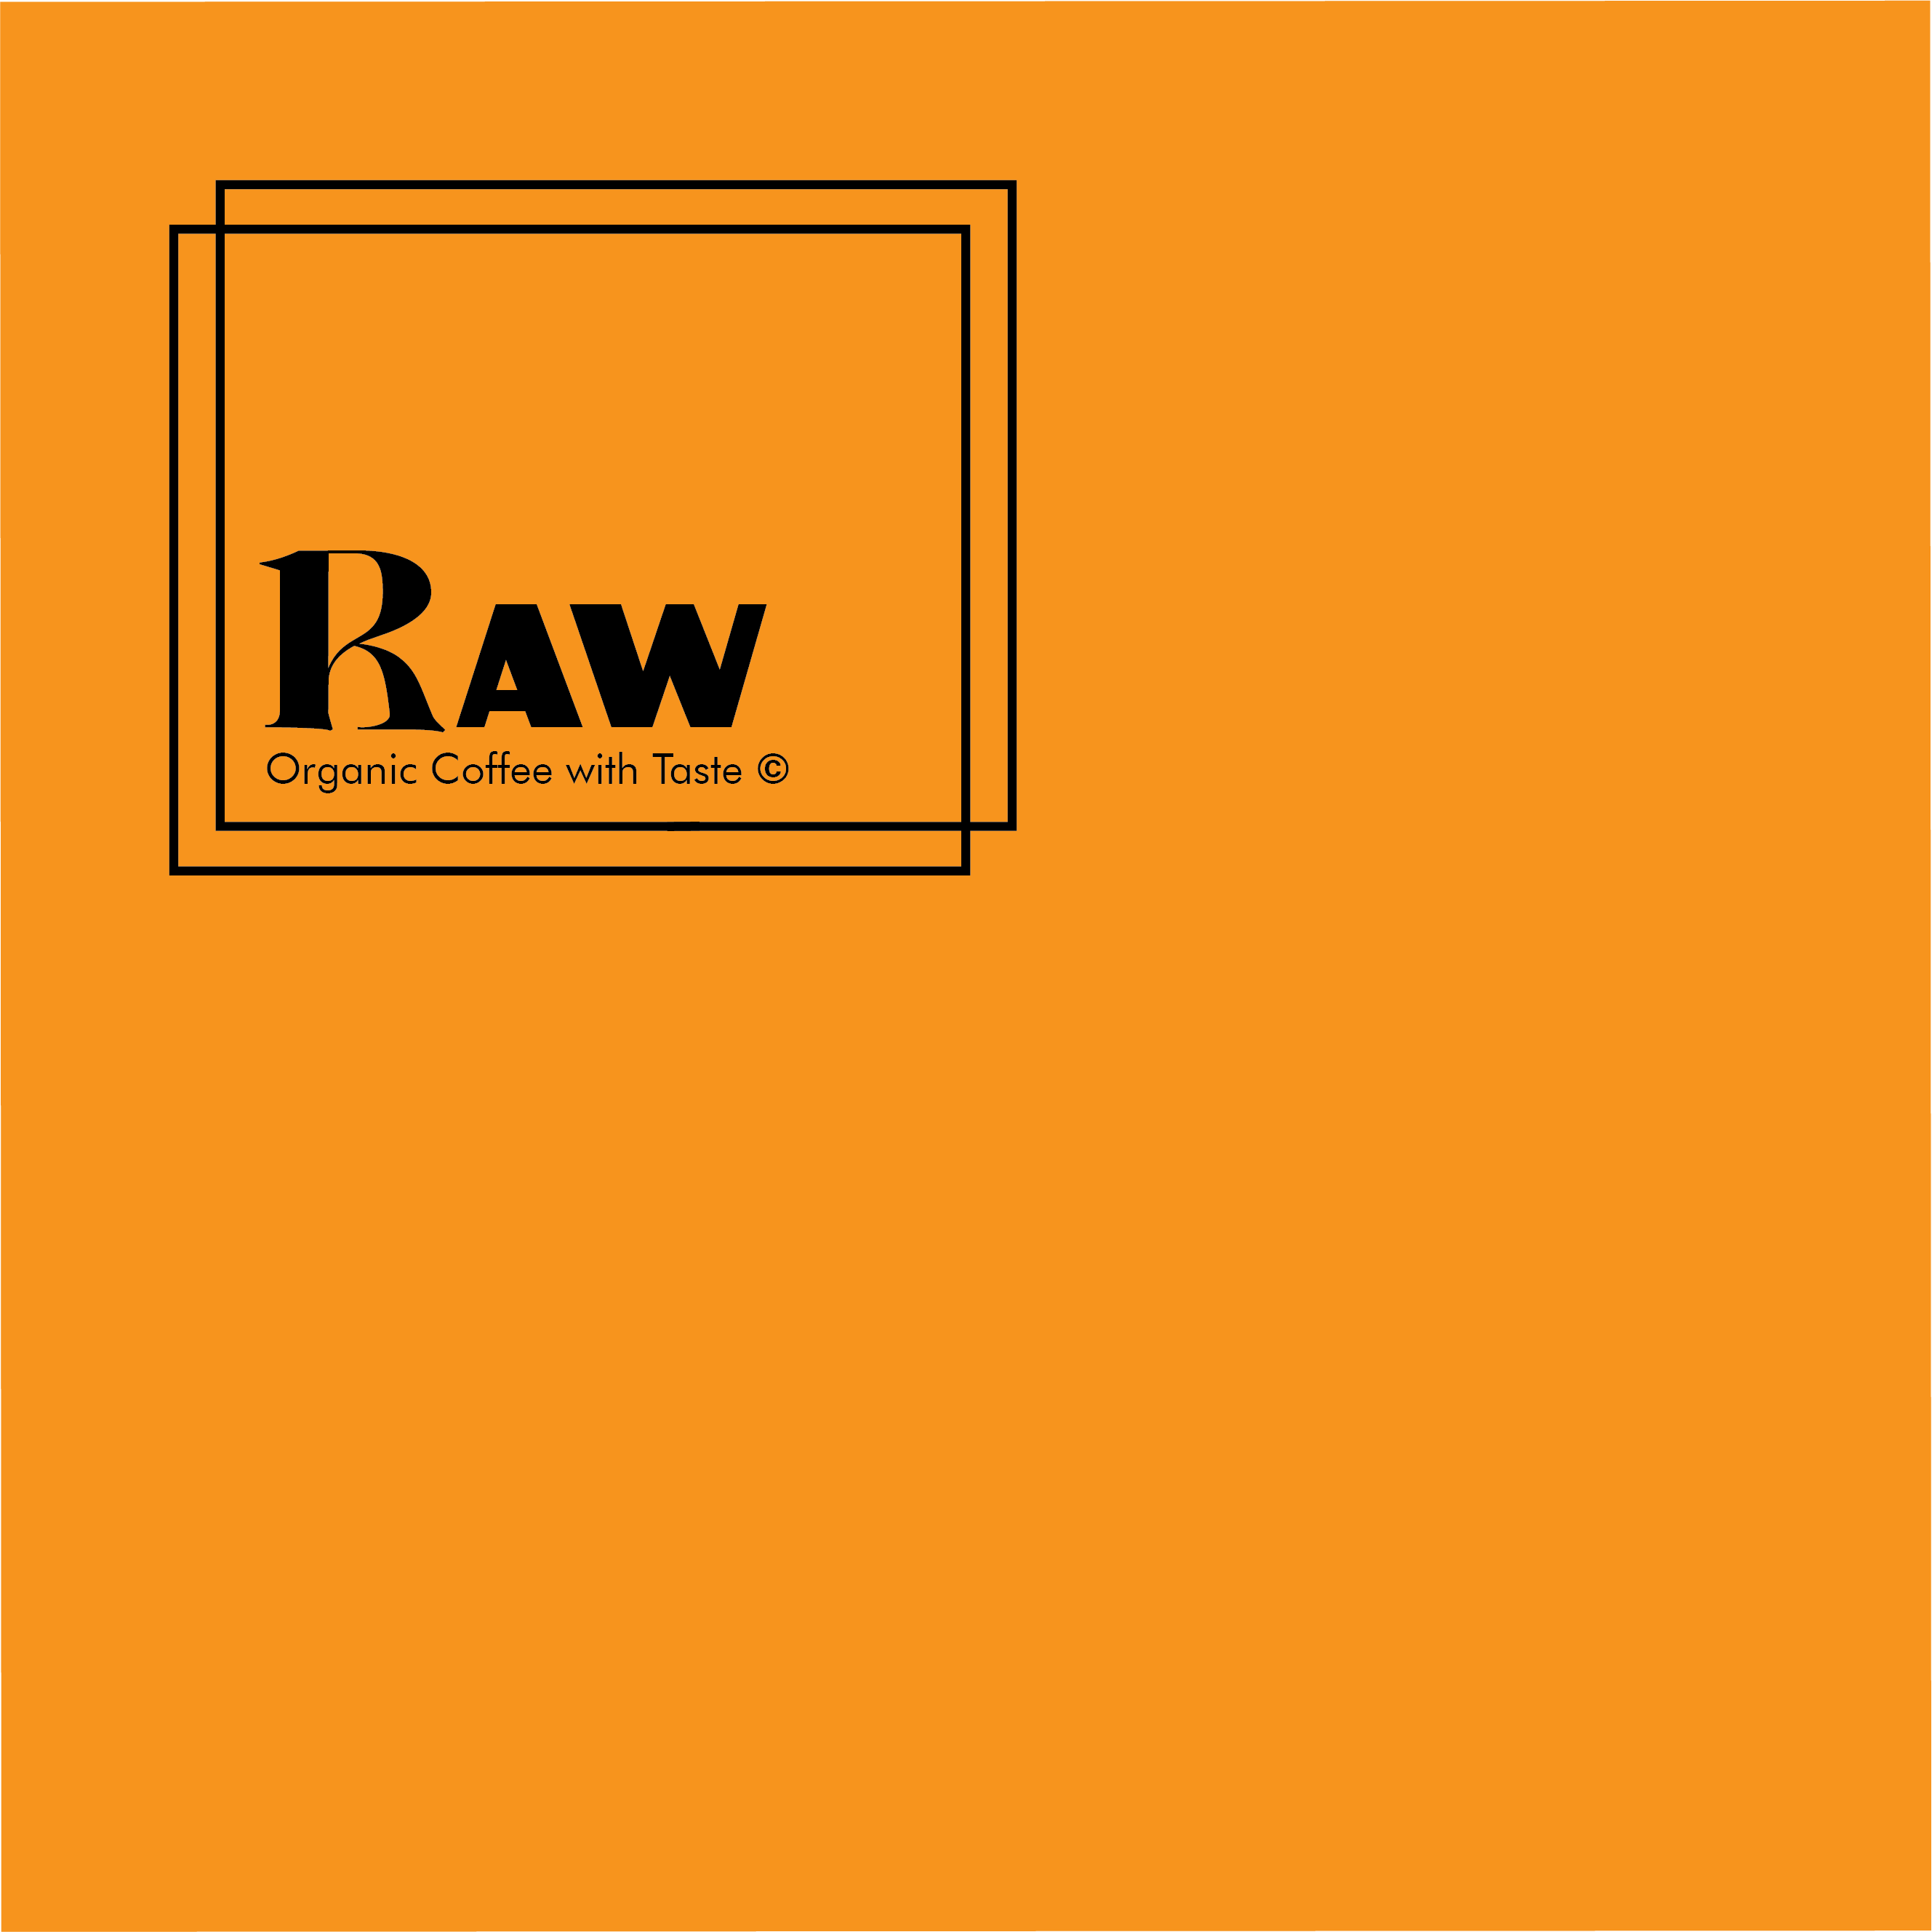 Raw Coffee - Wexible - Identity - Vanhuffel (8)-min